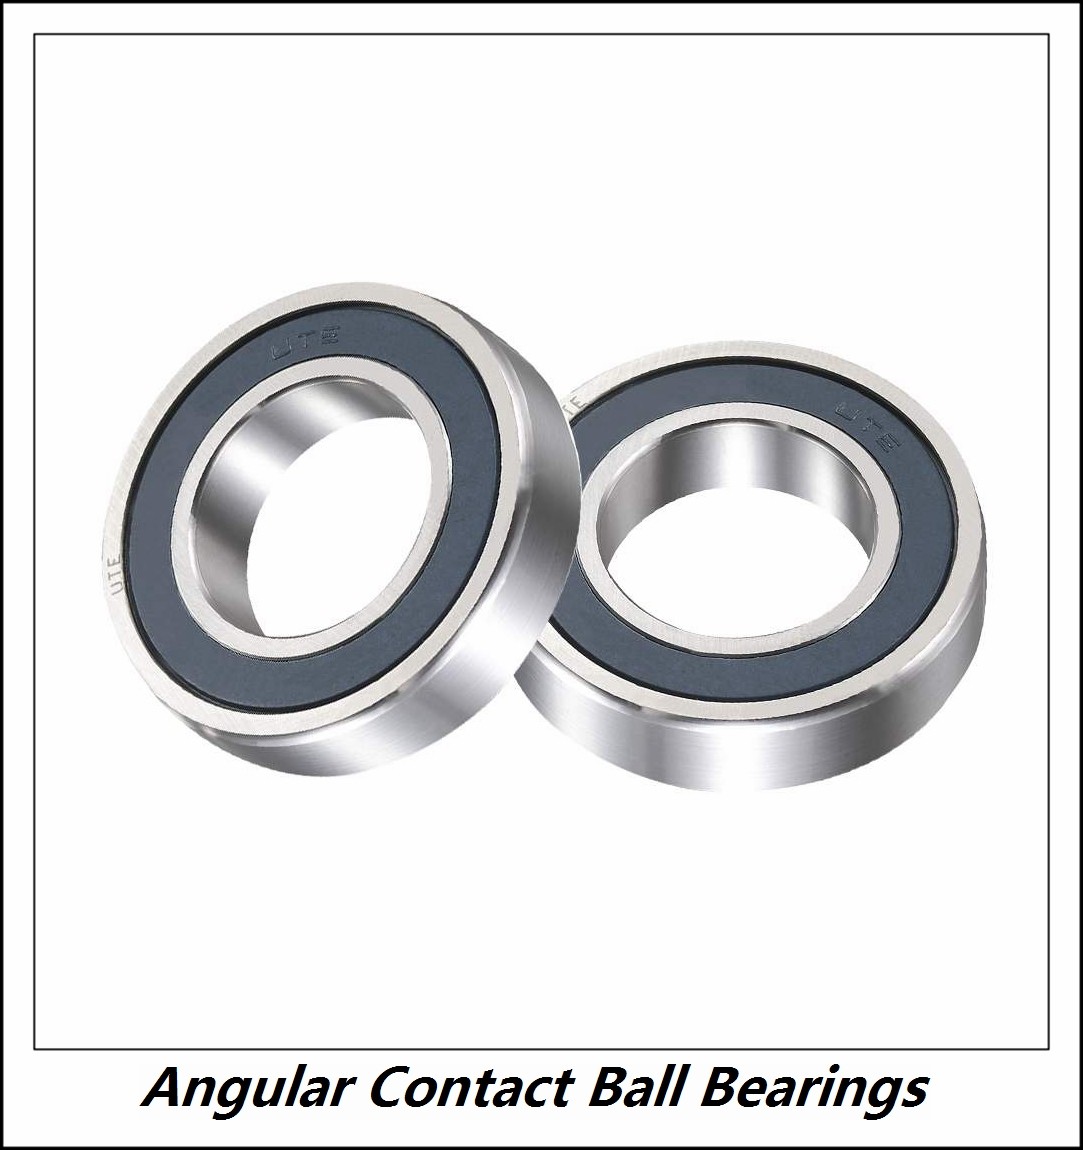 0.669 Inch | 17 Millimeter x 1.575 Inch | 40 Millimeter x 0.689 Inch | 17.5 Millimeter  INA 3203-2RSR-C3  Angular Contact Ball Bearings